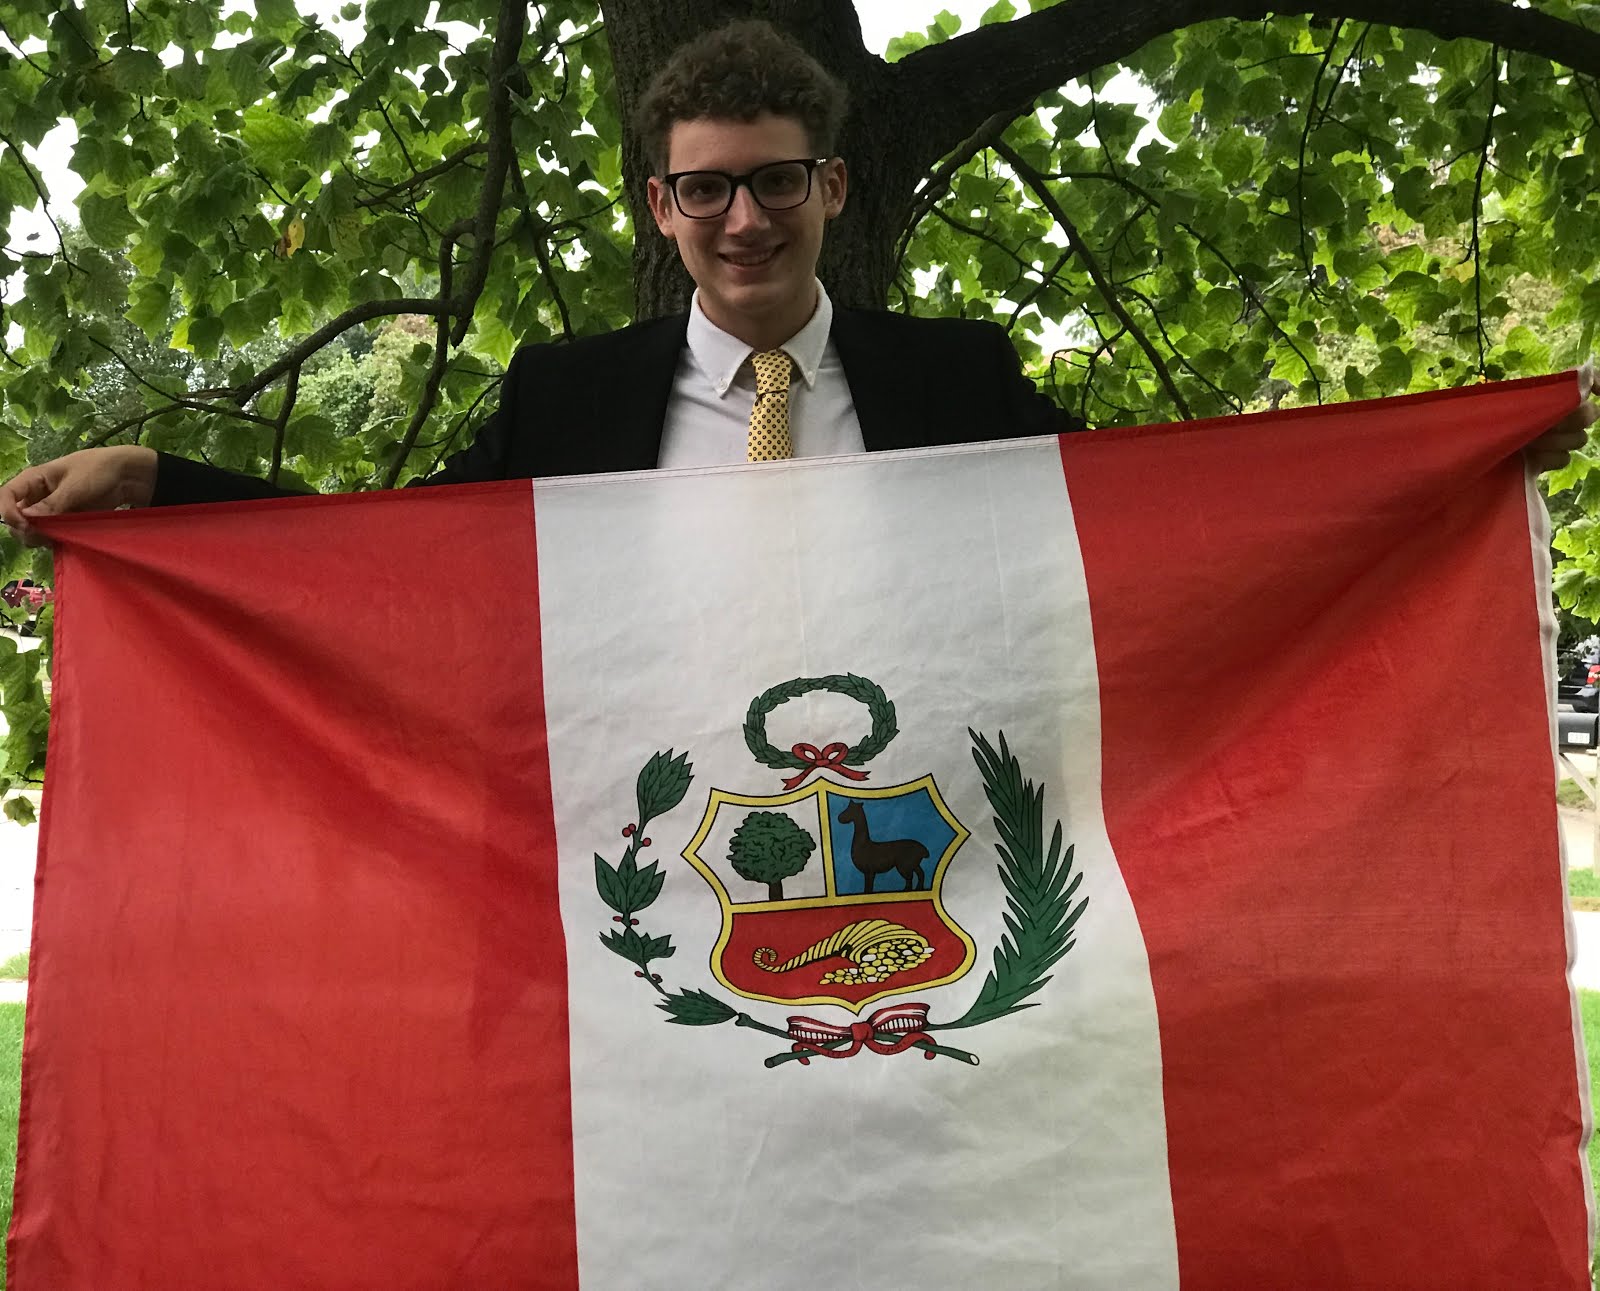 Peru Chiclayo Mission (October 2019 - April 2020)